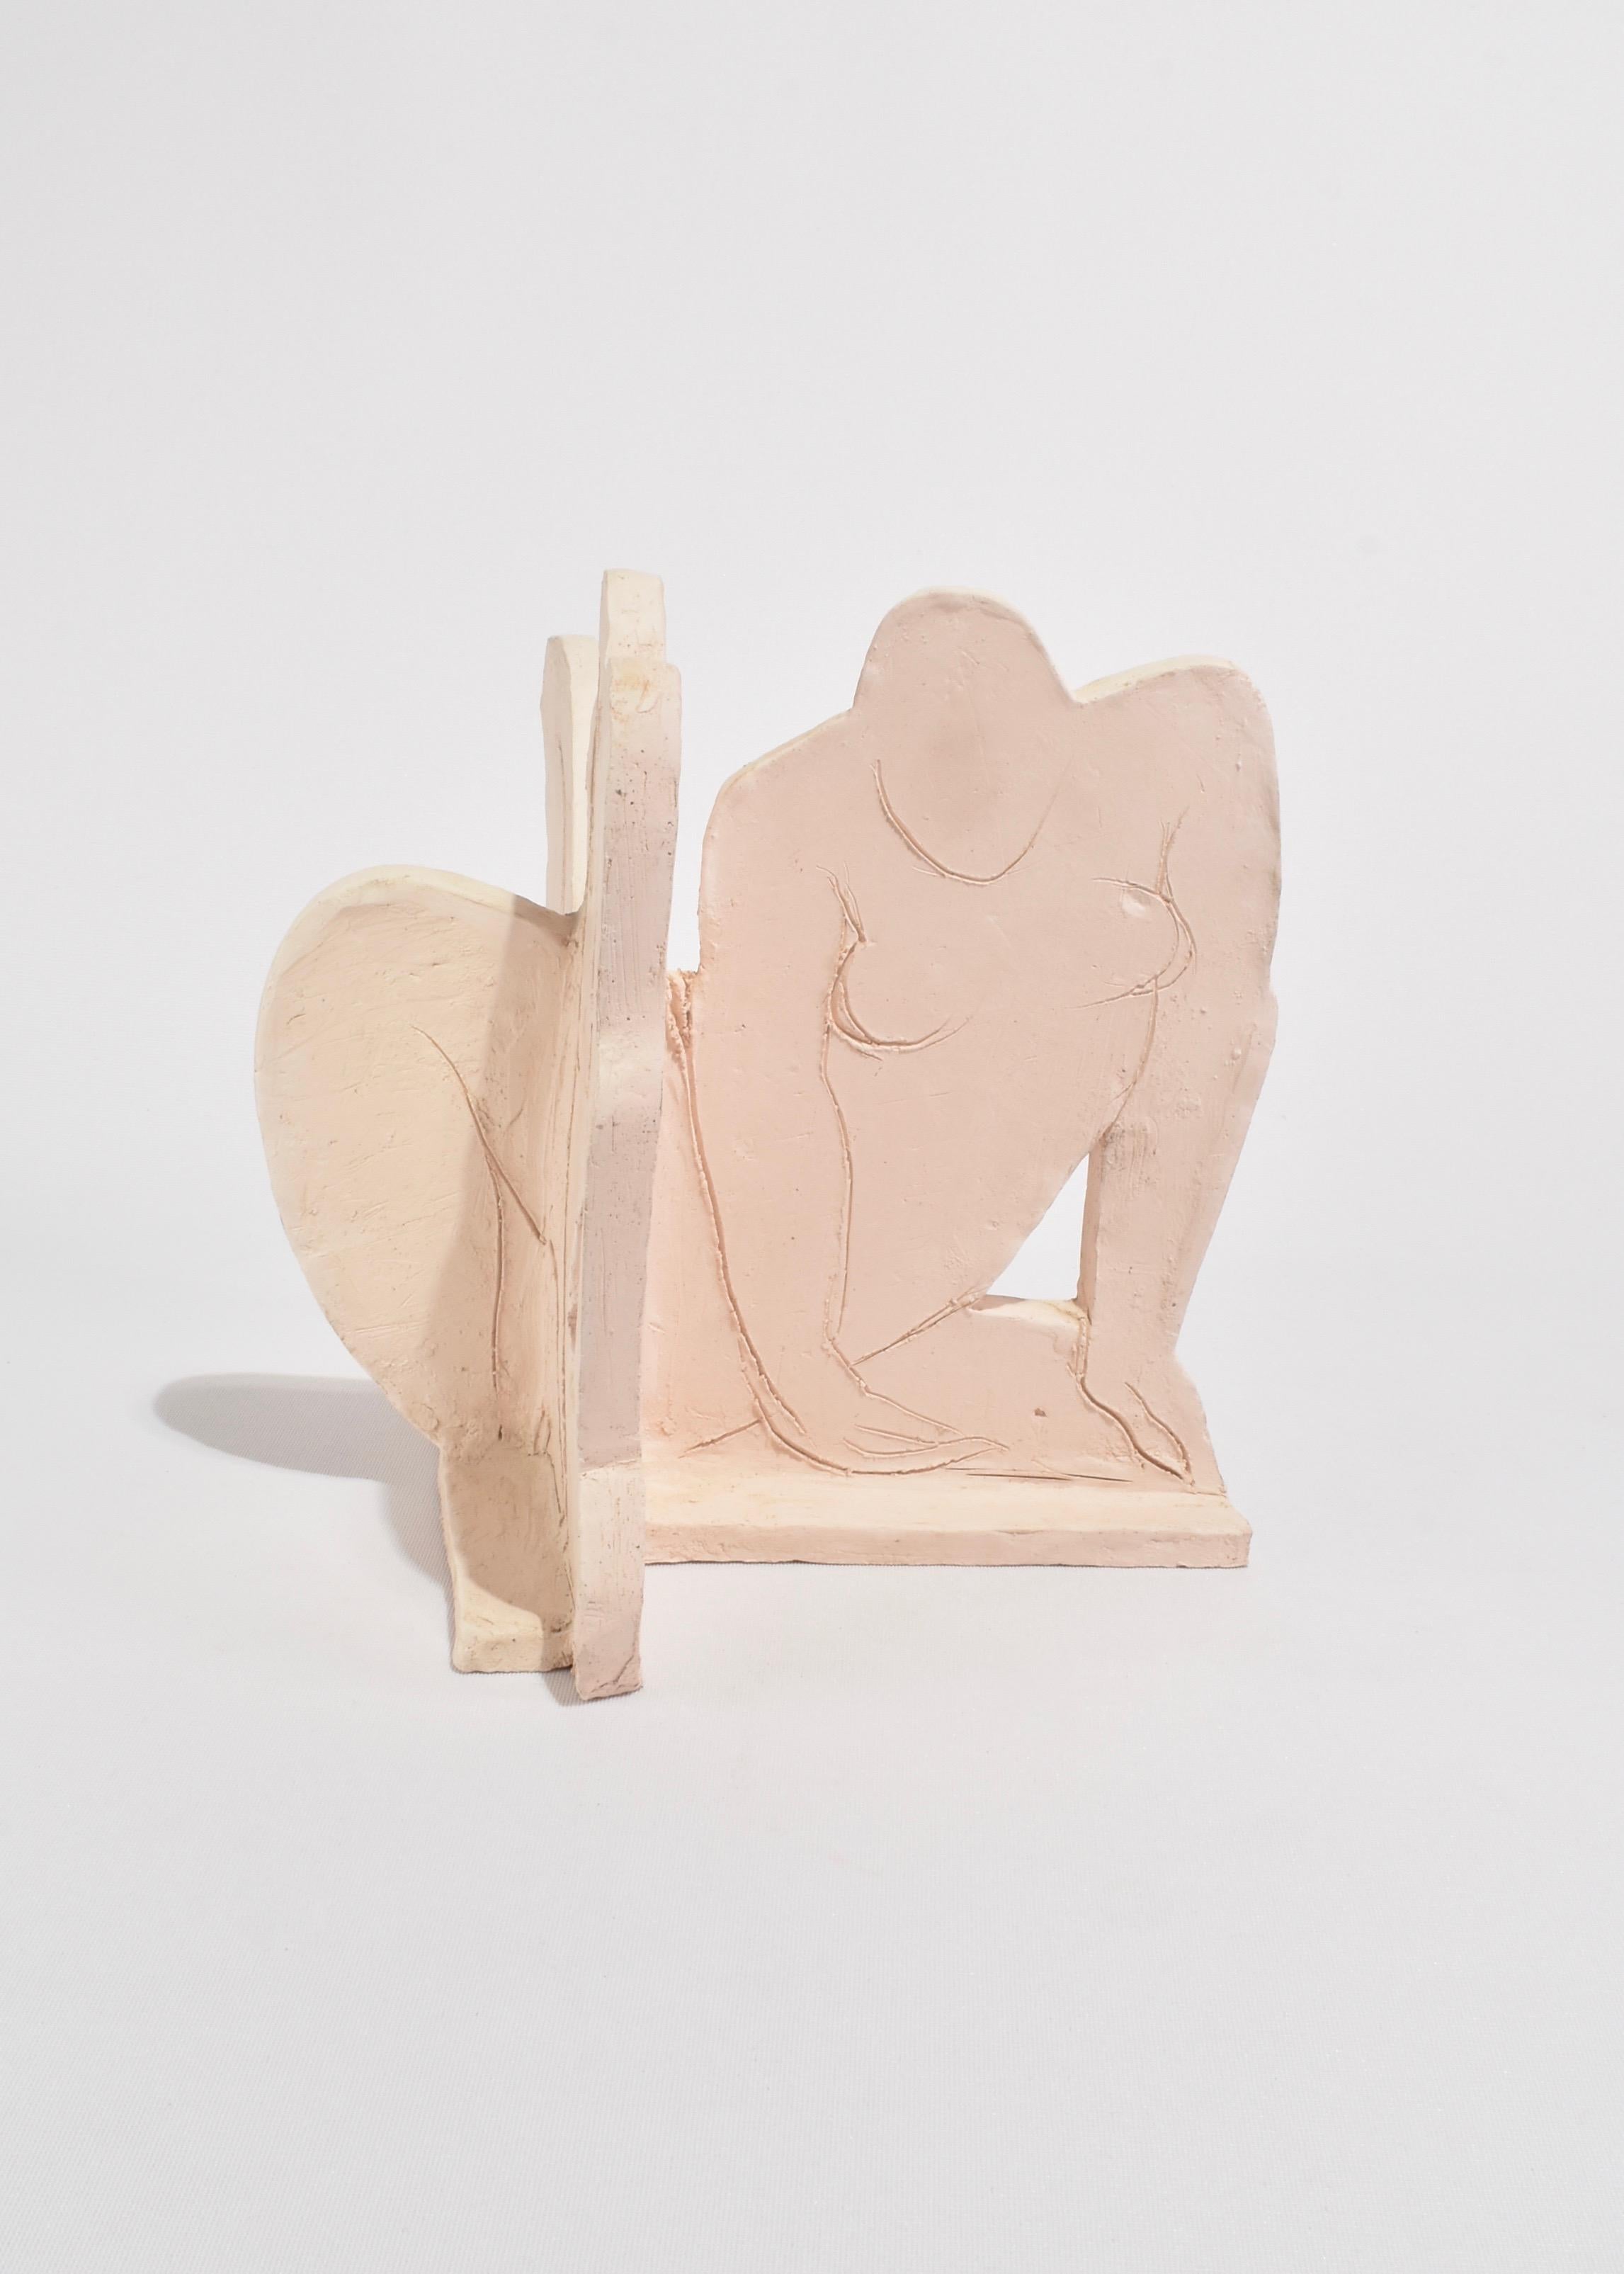 Multi-Sided Figural Sculpture In Good Condition For Sale In Richmond, VA